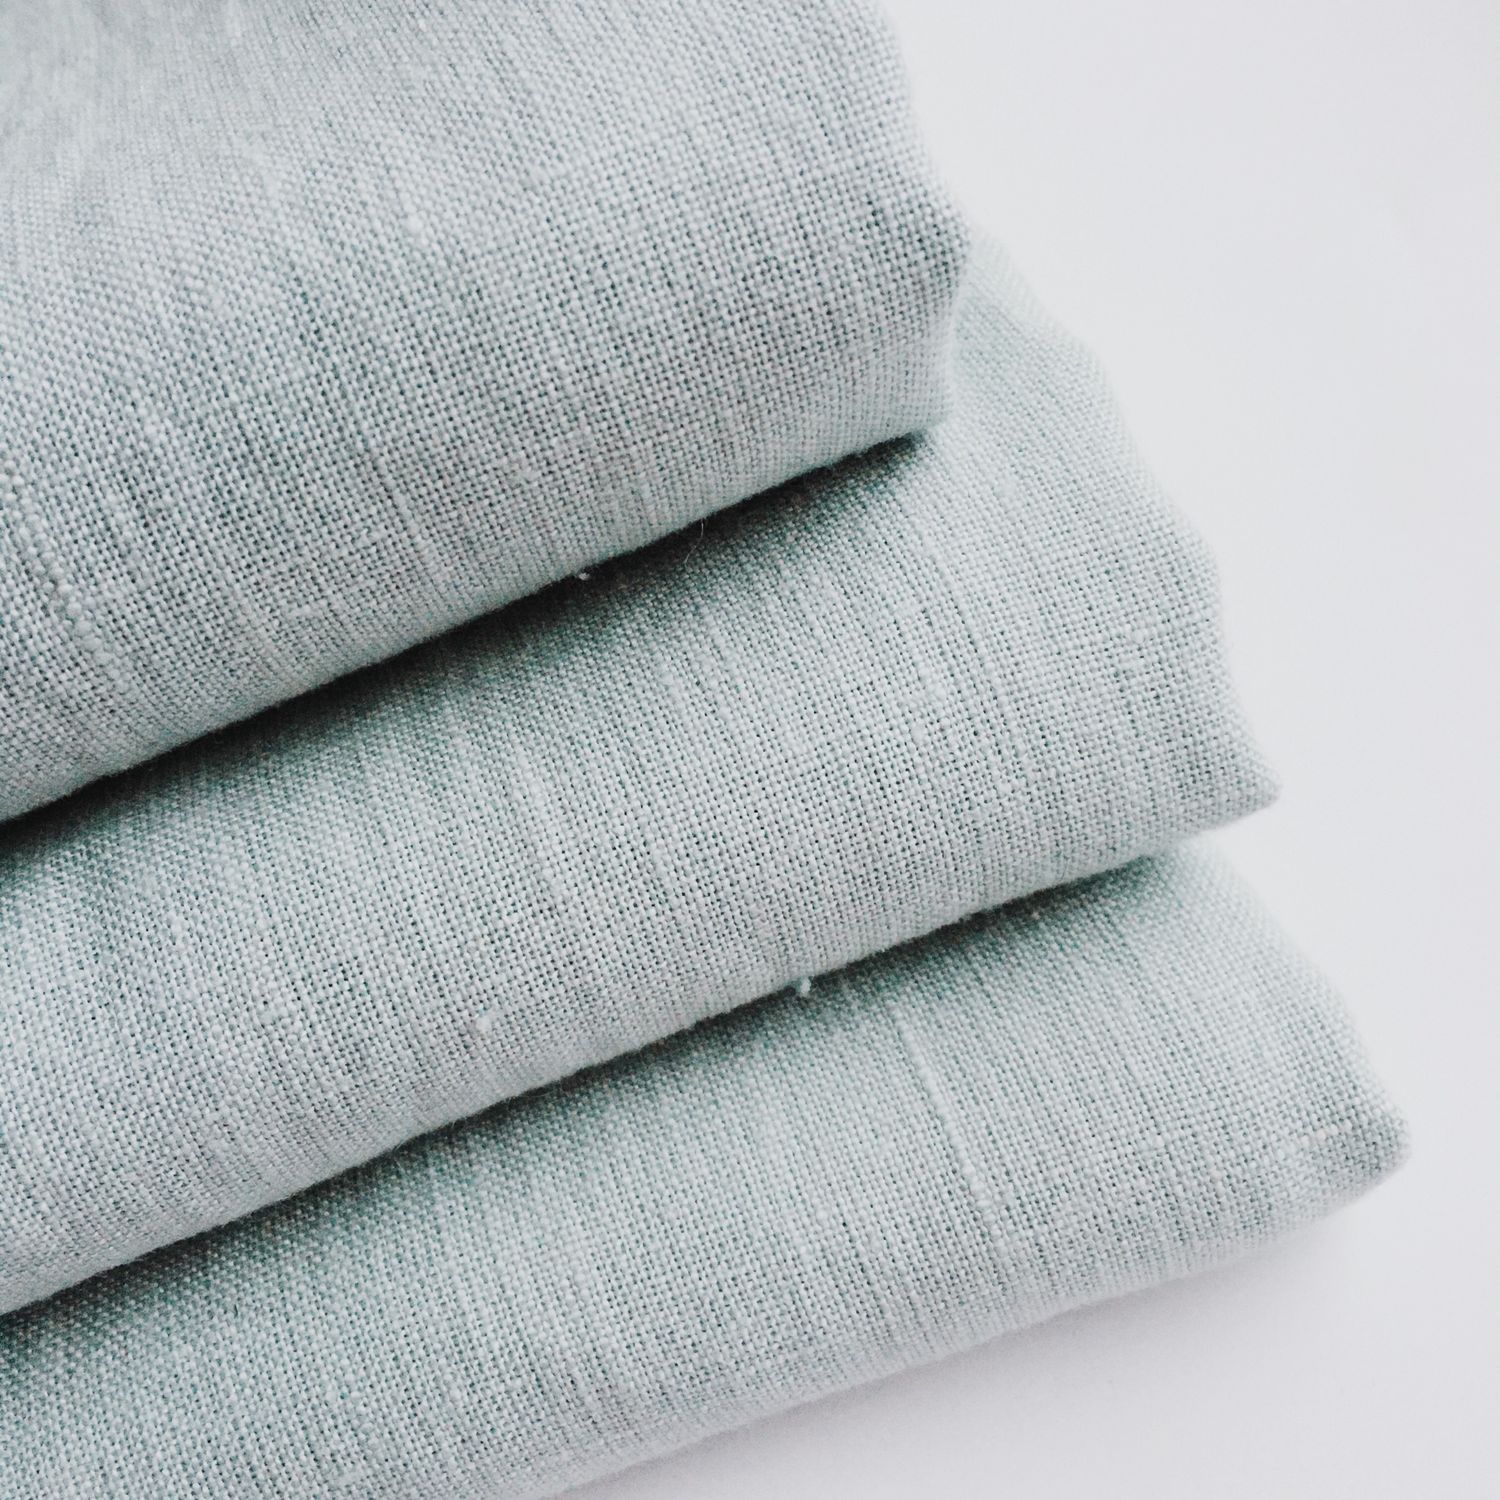 Ткань белорусский лен. Льняное полотенце. Ткань льняная для полотенец. Льняное полотно для полотенец. Ткань лен для полотенец.